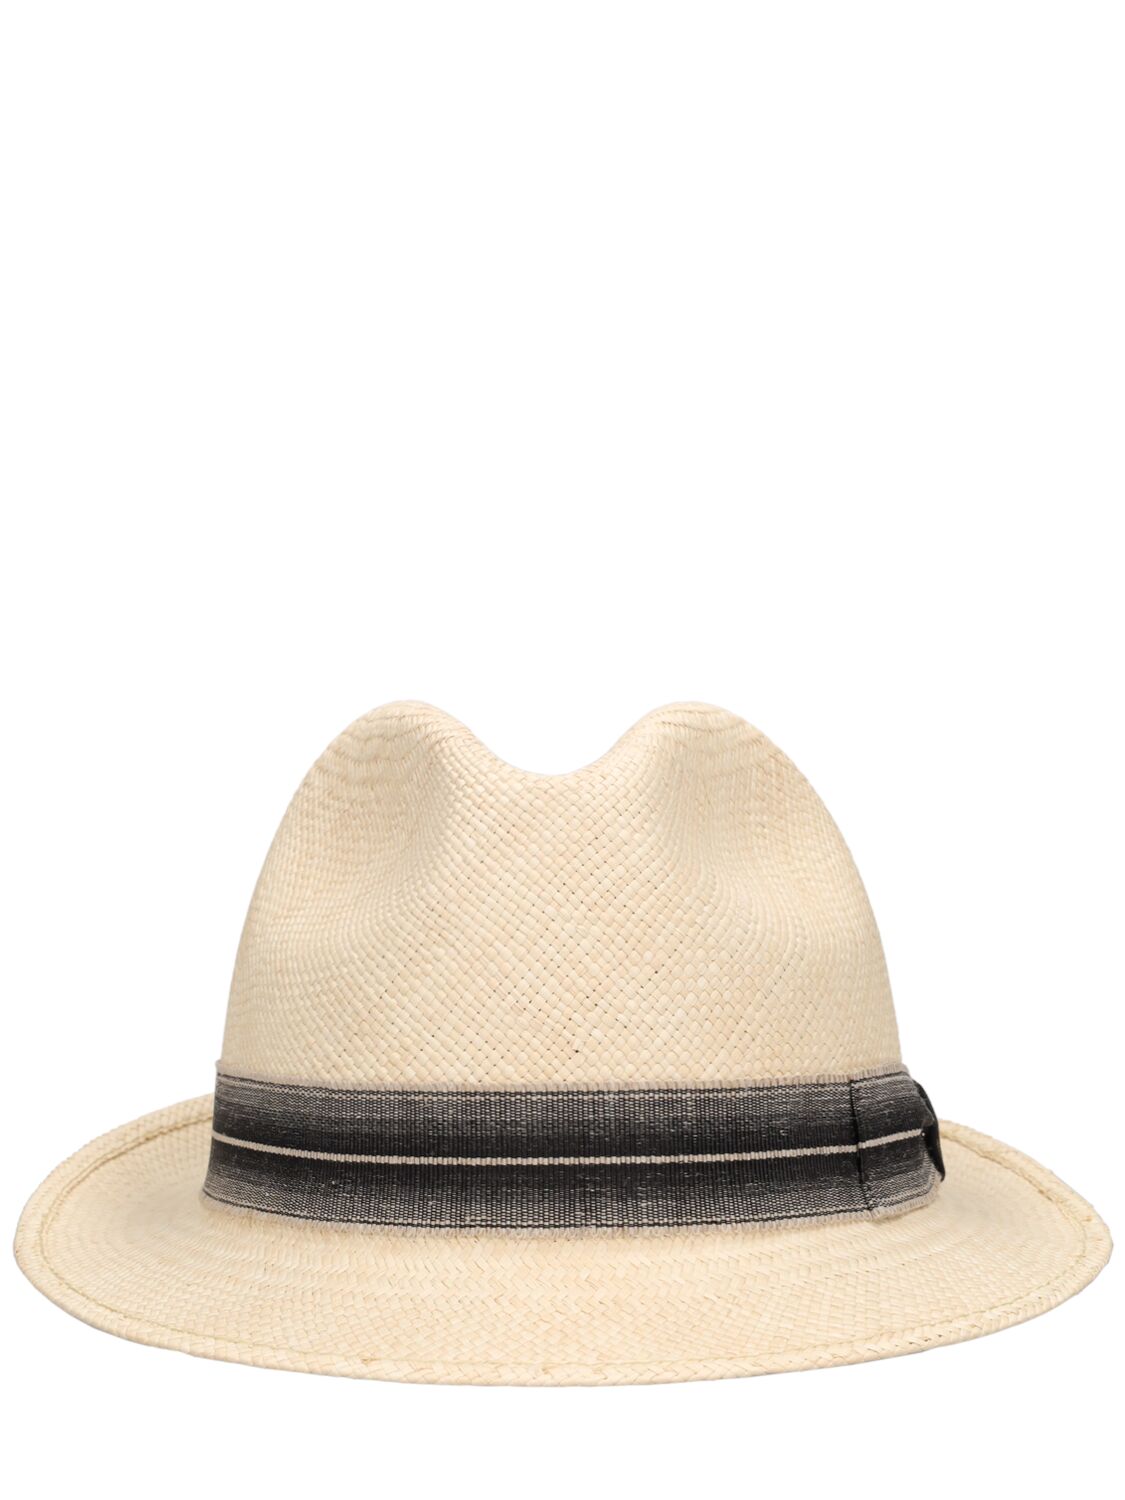 Image of Trilby Straw Panama Hat